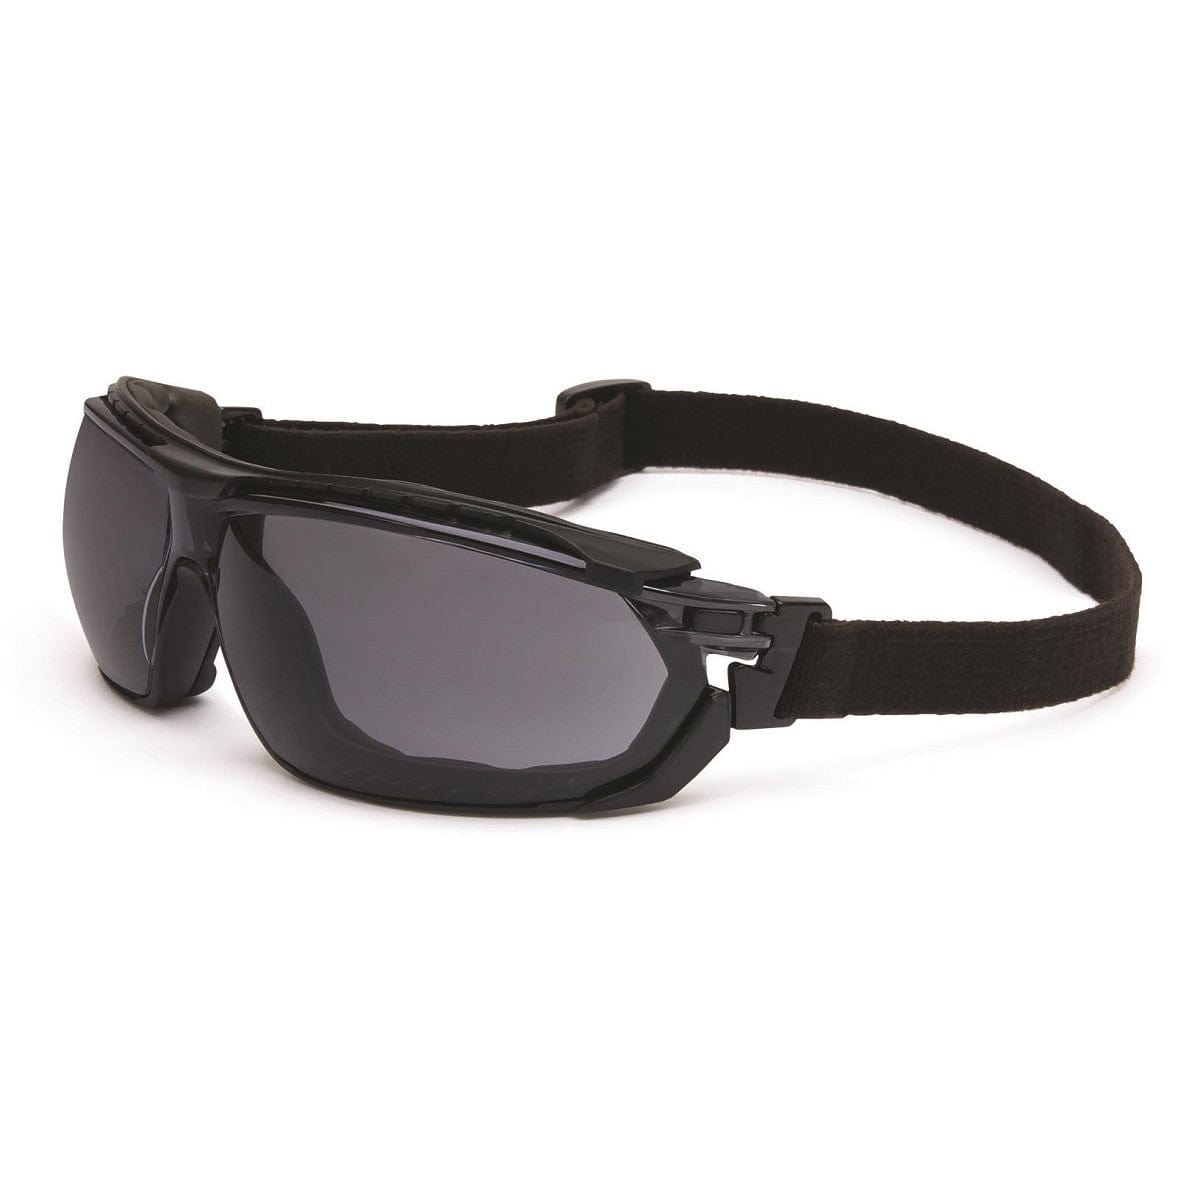 Uvex Tirade Safety Glasses Black With Gray Anti Fog Lens